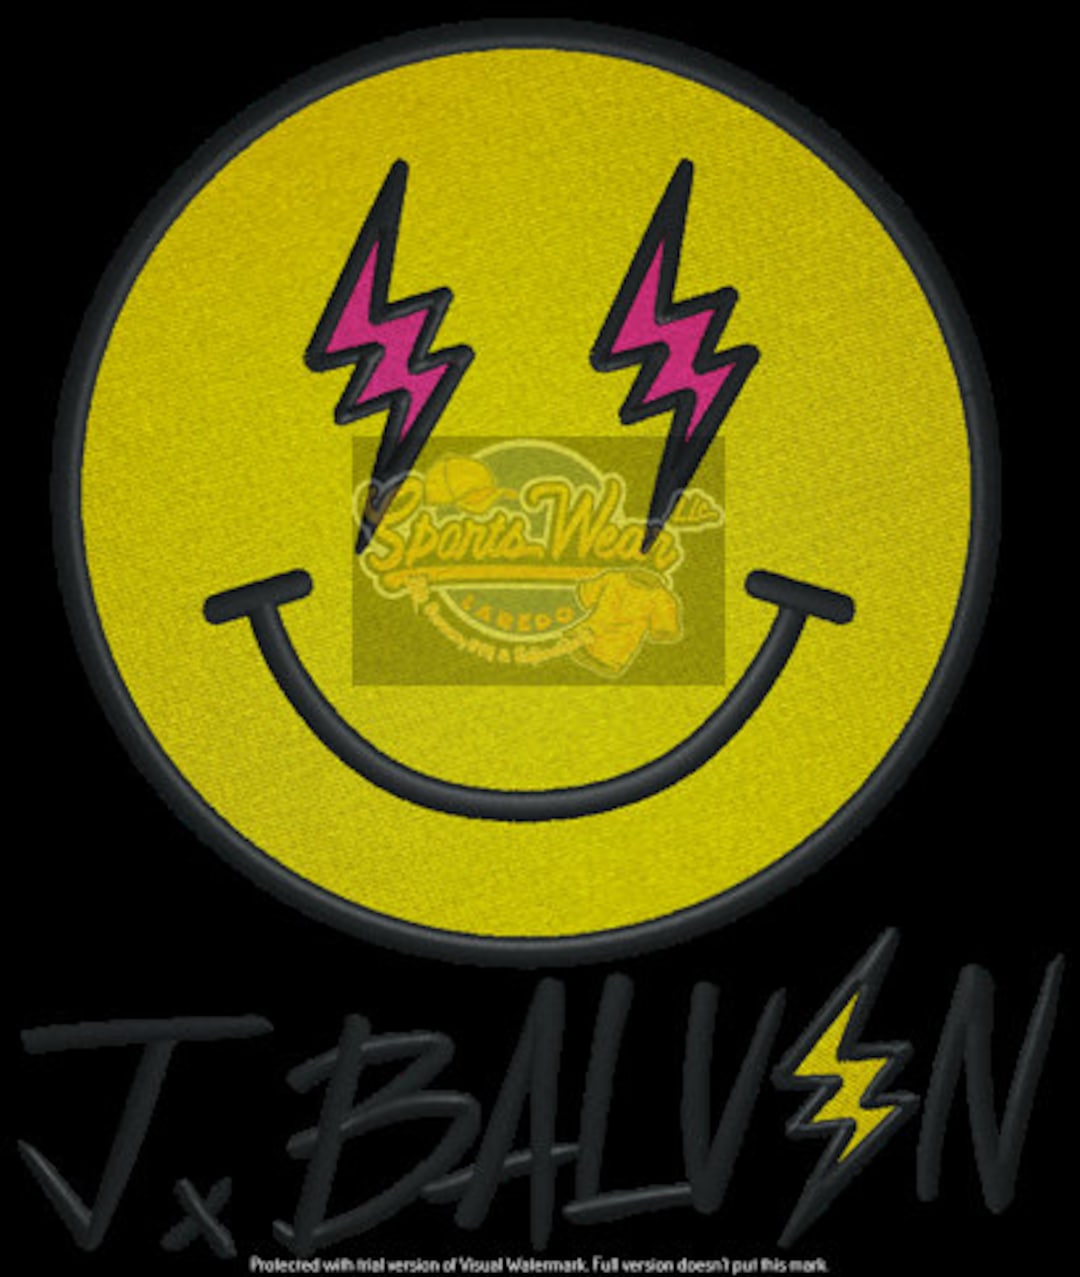 j balvin logo